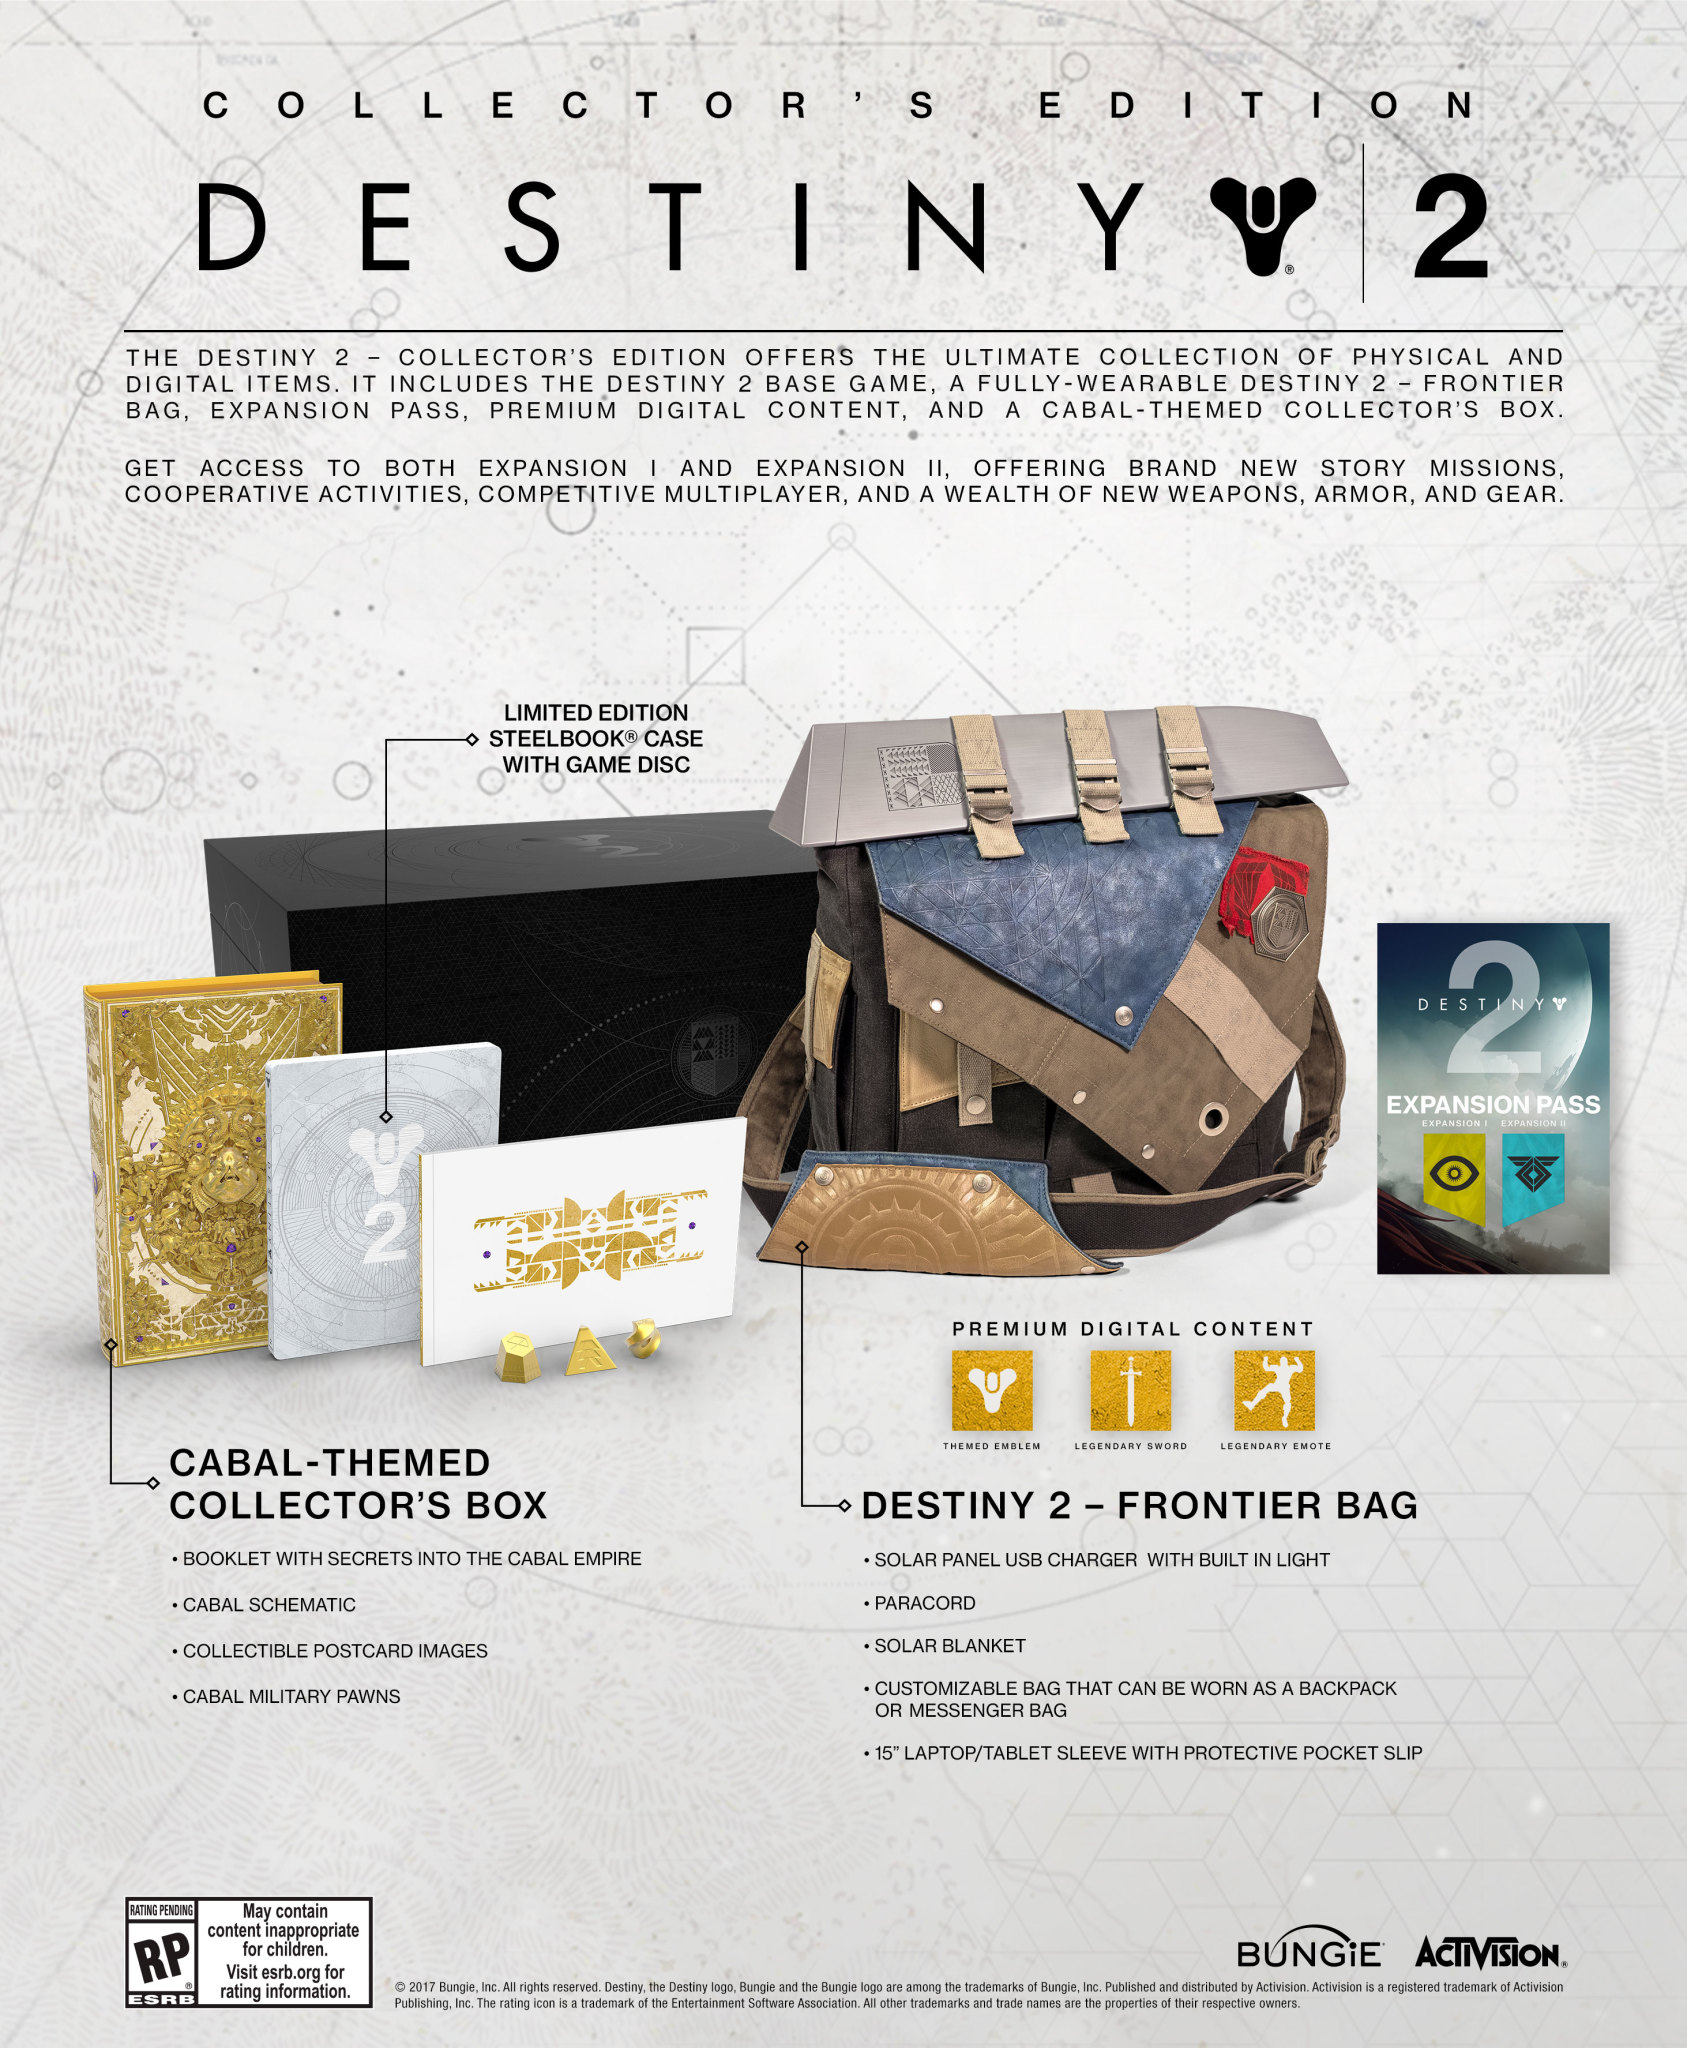 Destiny 2 giveaway collectors edition